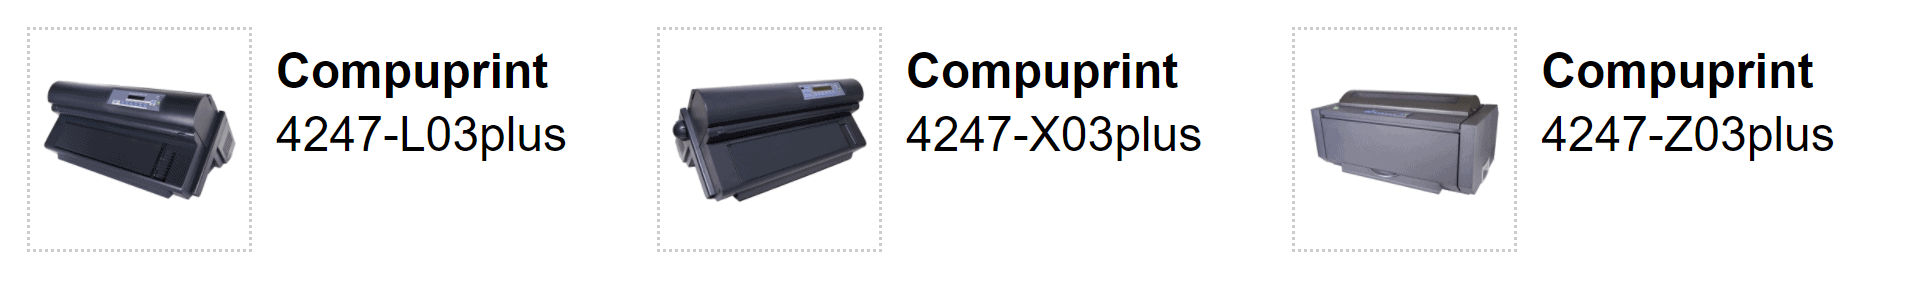 Compuprint serial dot matrix printers